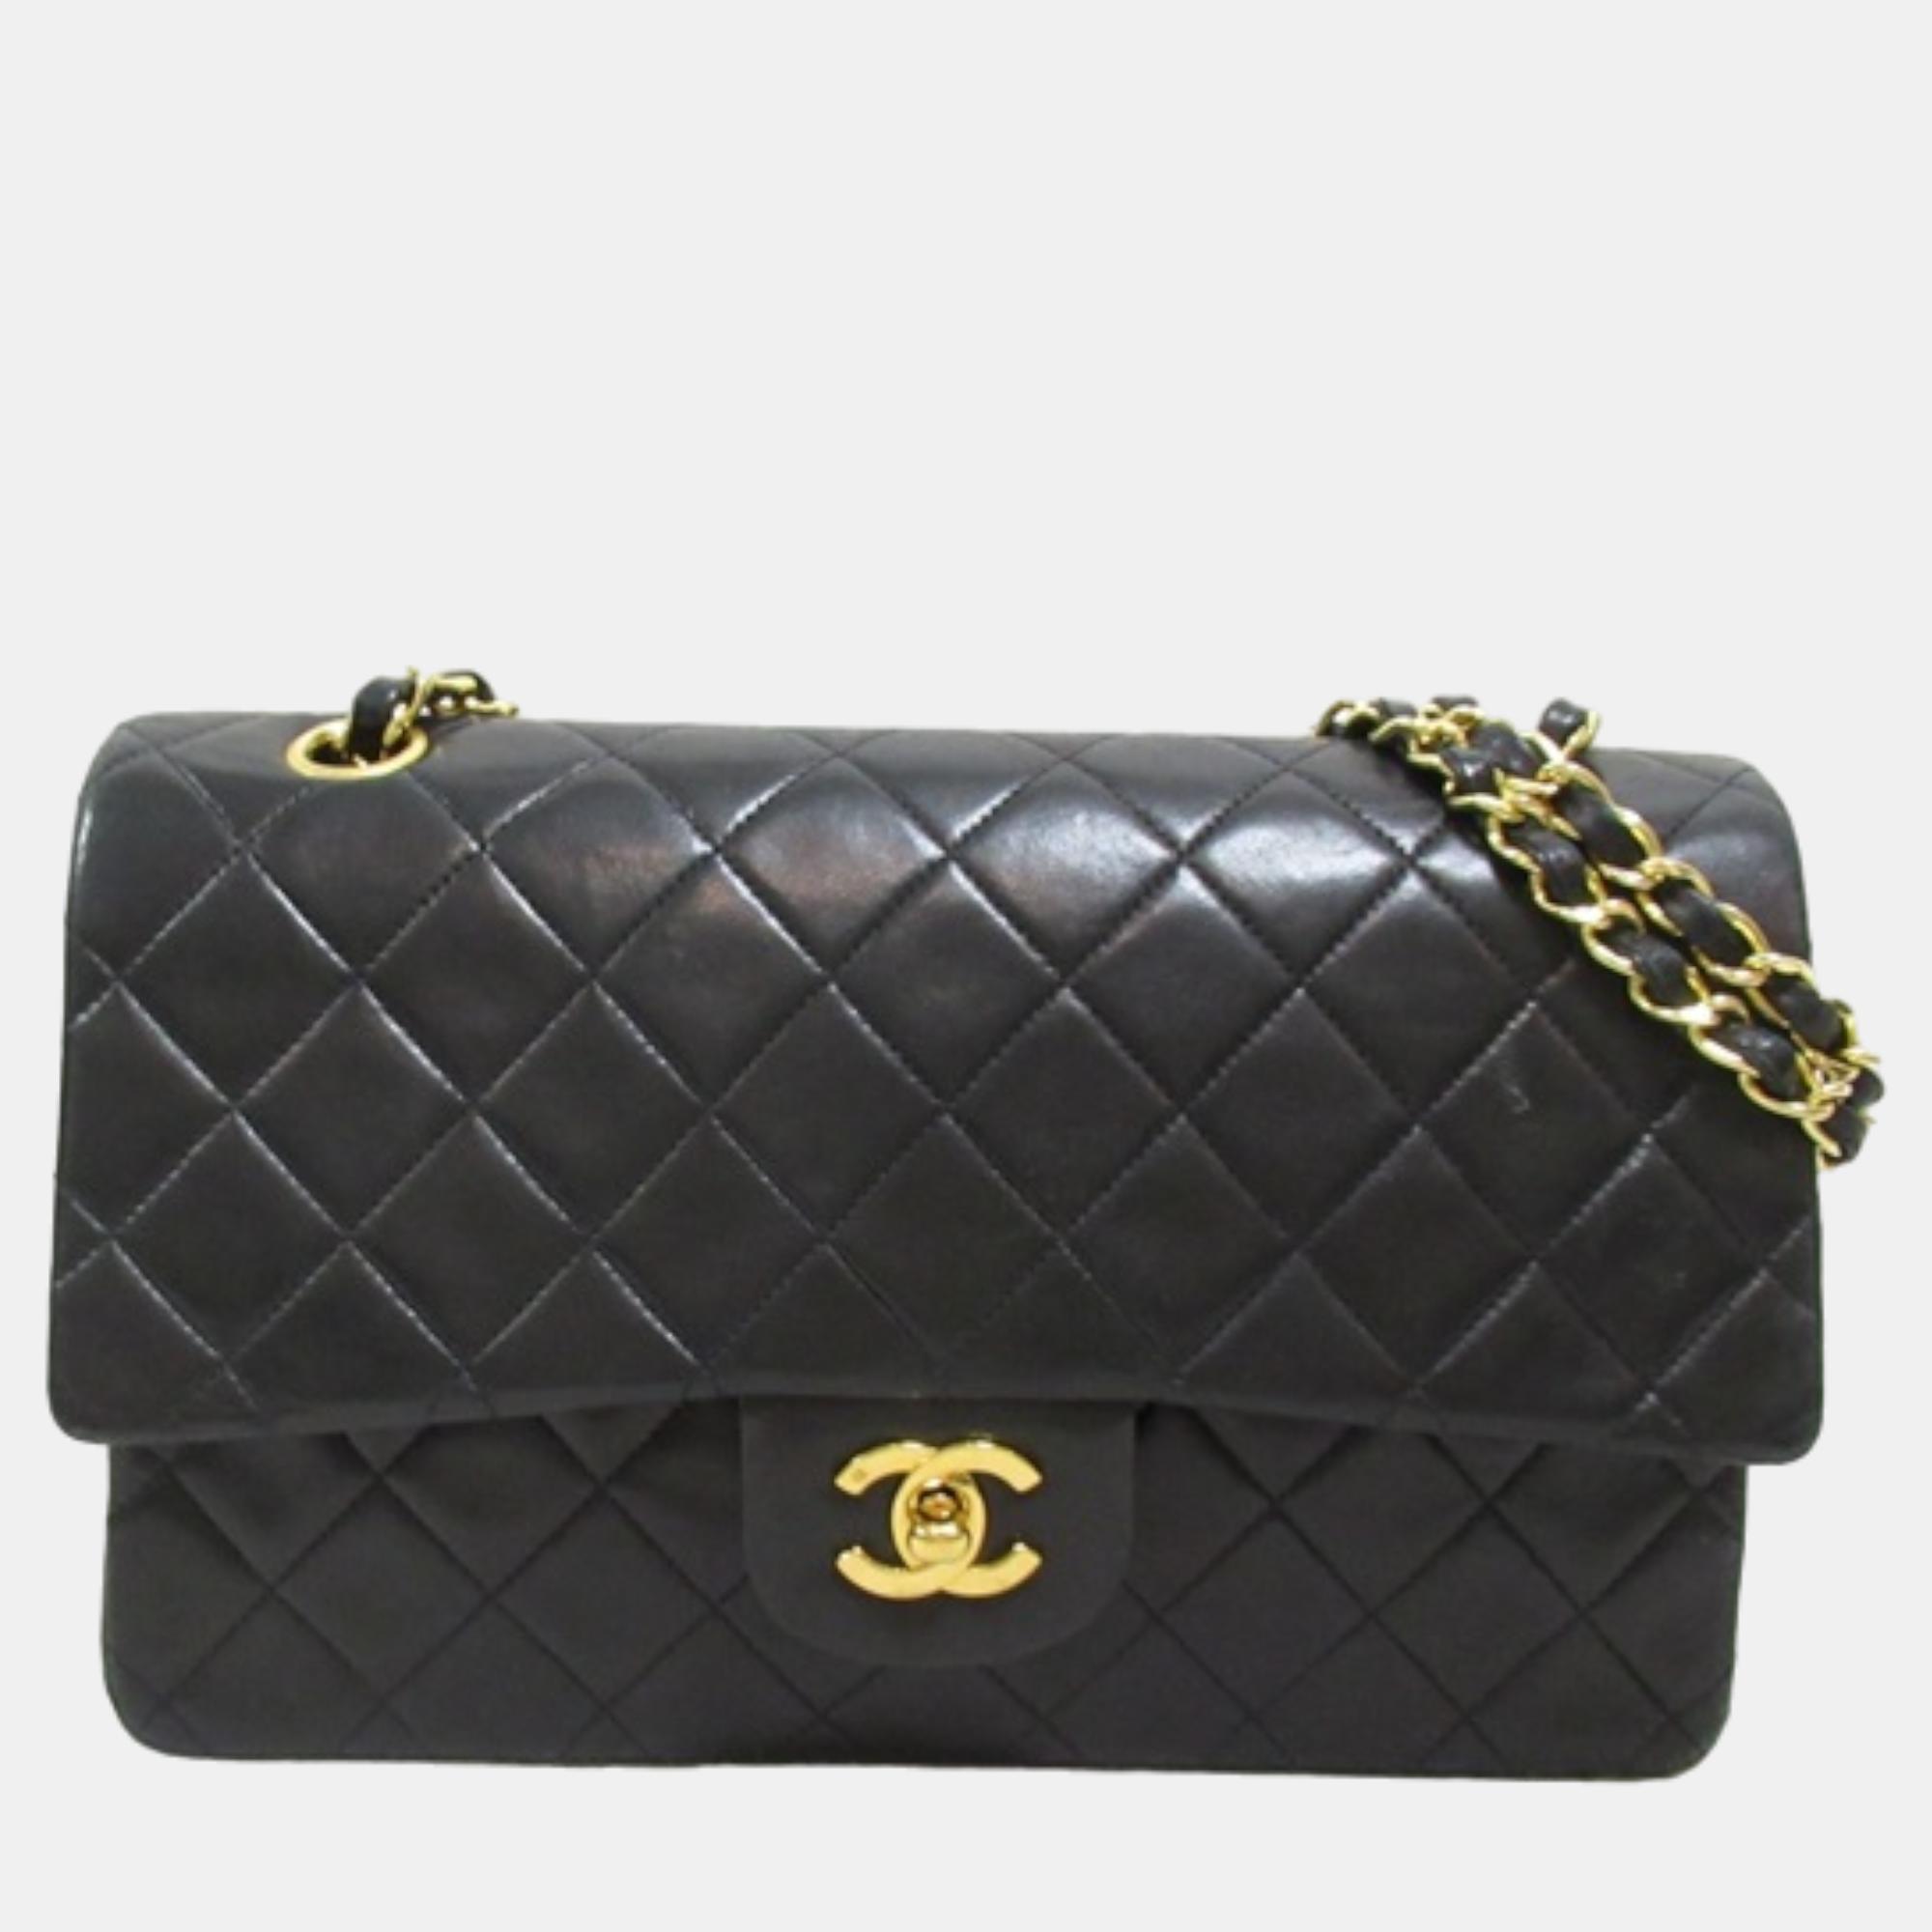 Chanel black leather medium classic double flap bag